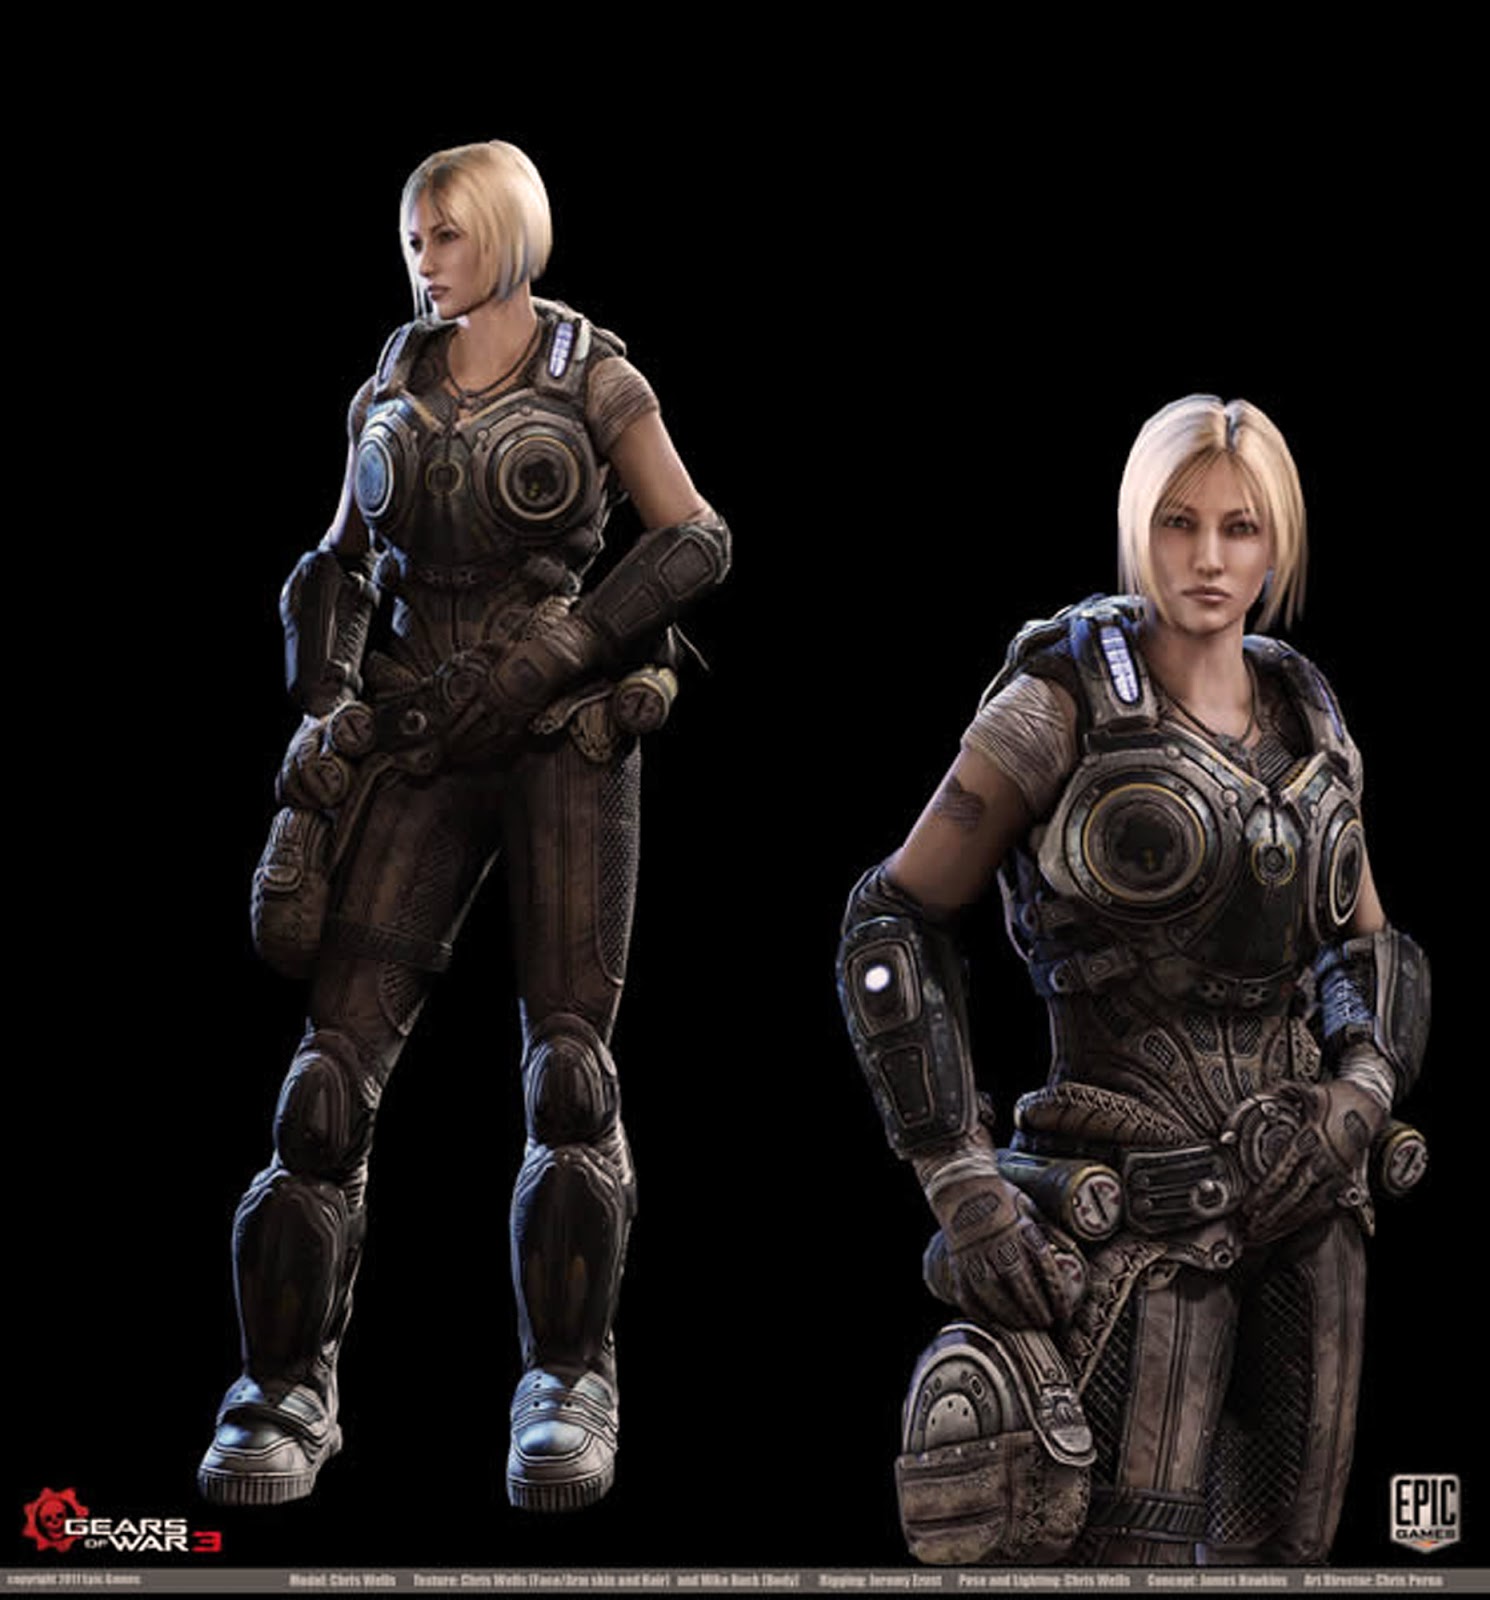 gears+of+war+4+judgement+character+3d+model+zbrush+sci+fi+female+soldier+armor+concept+art+design+costume+5+Anya+Stroud.jpg